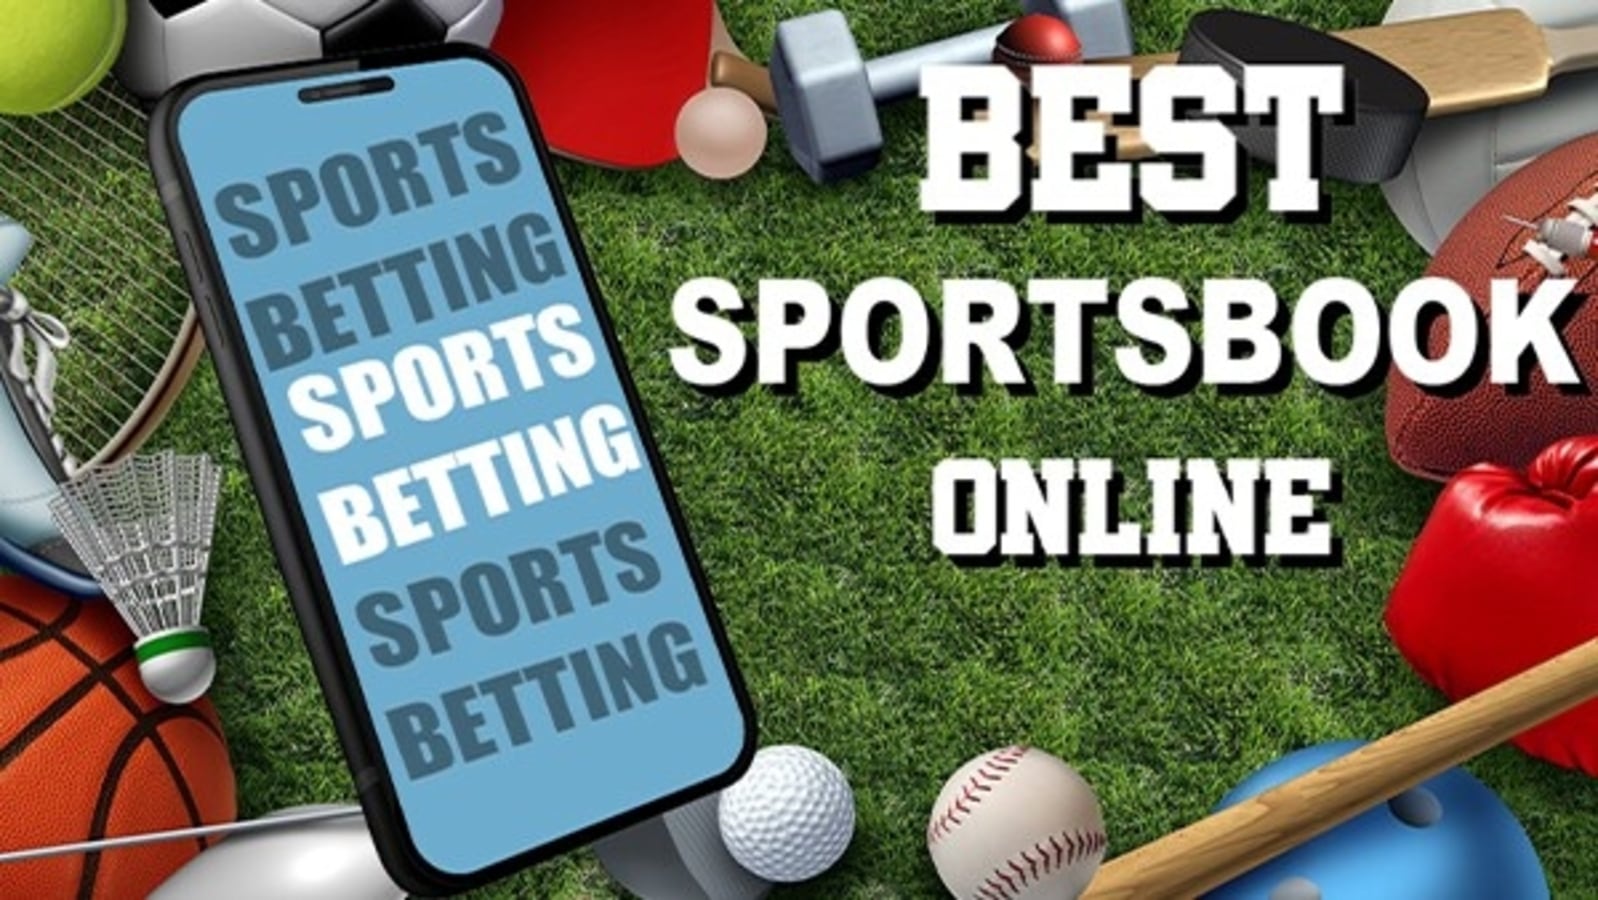 actionbets sportsbook bet online